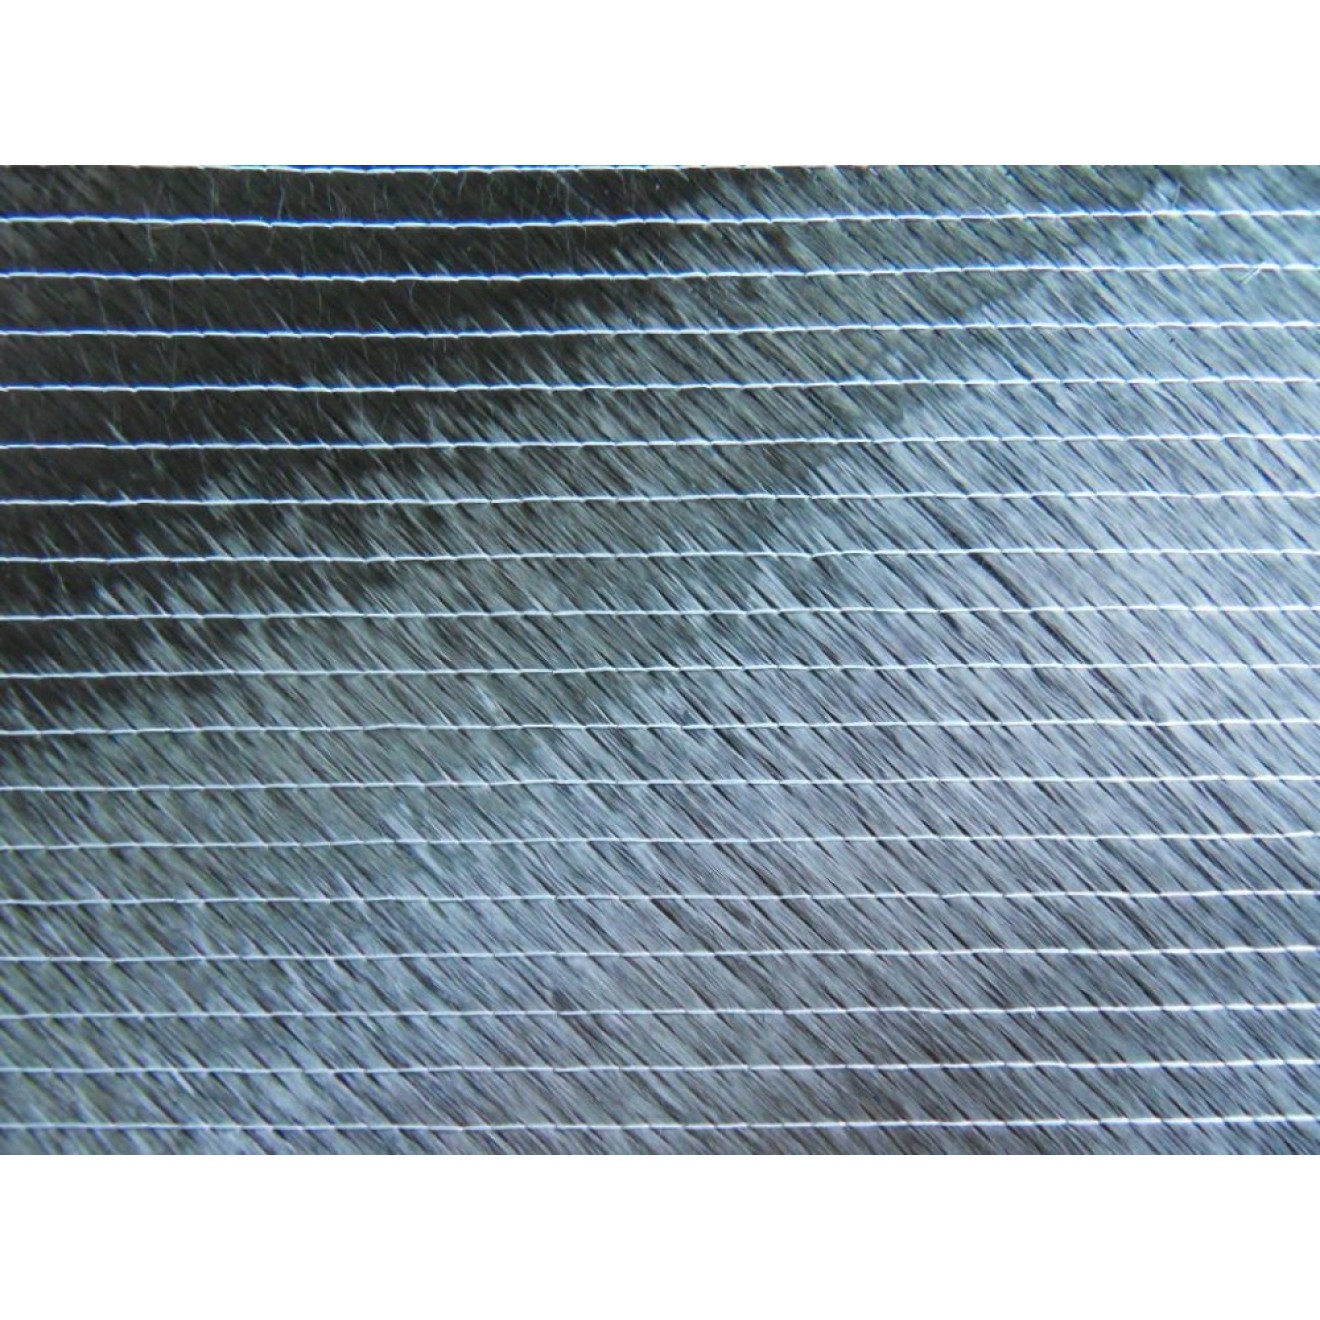 Carbon non-crimp fabric quadraxial 1000g/m2, width 127cm